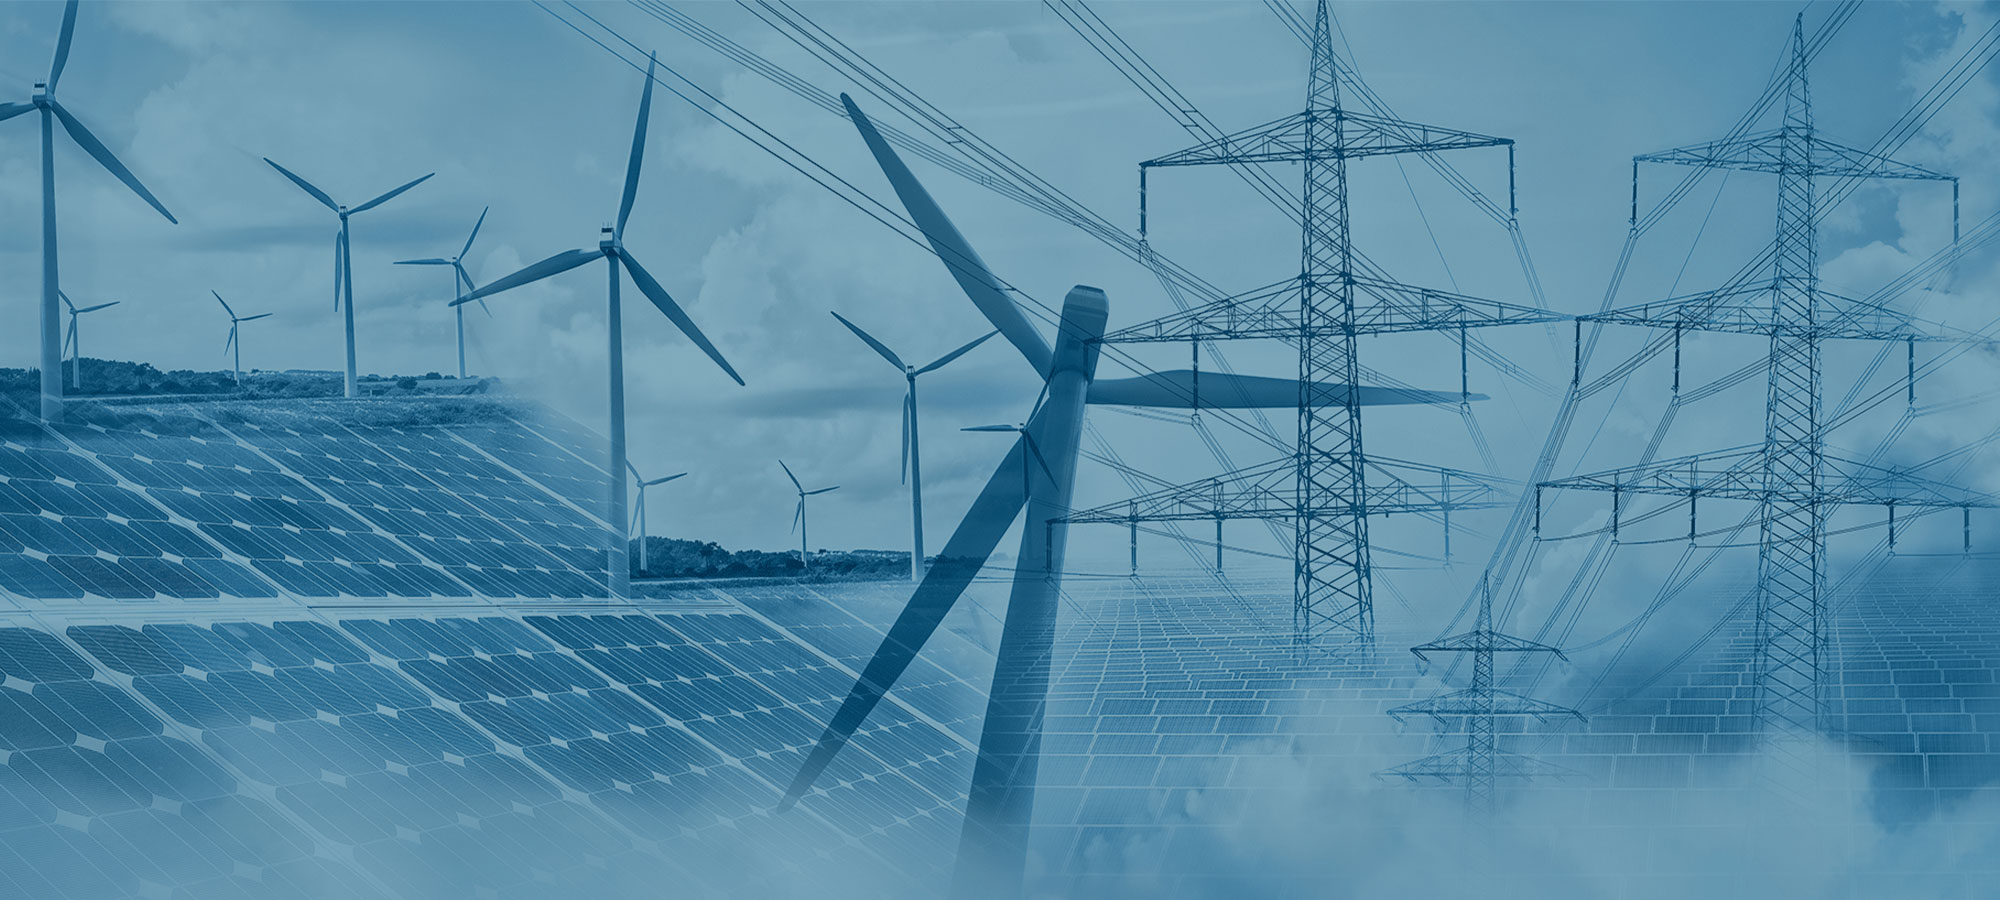 Electricity regulatory performance image